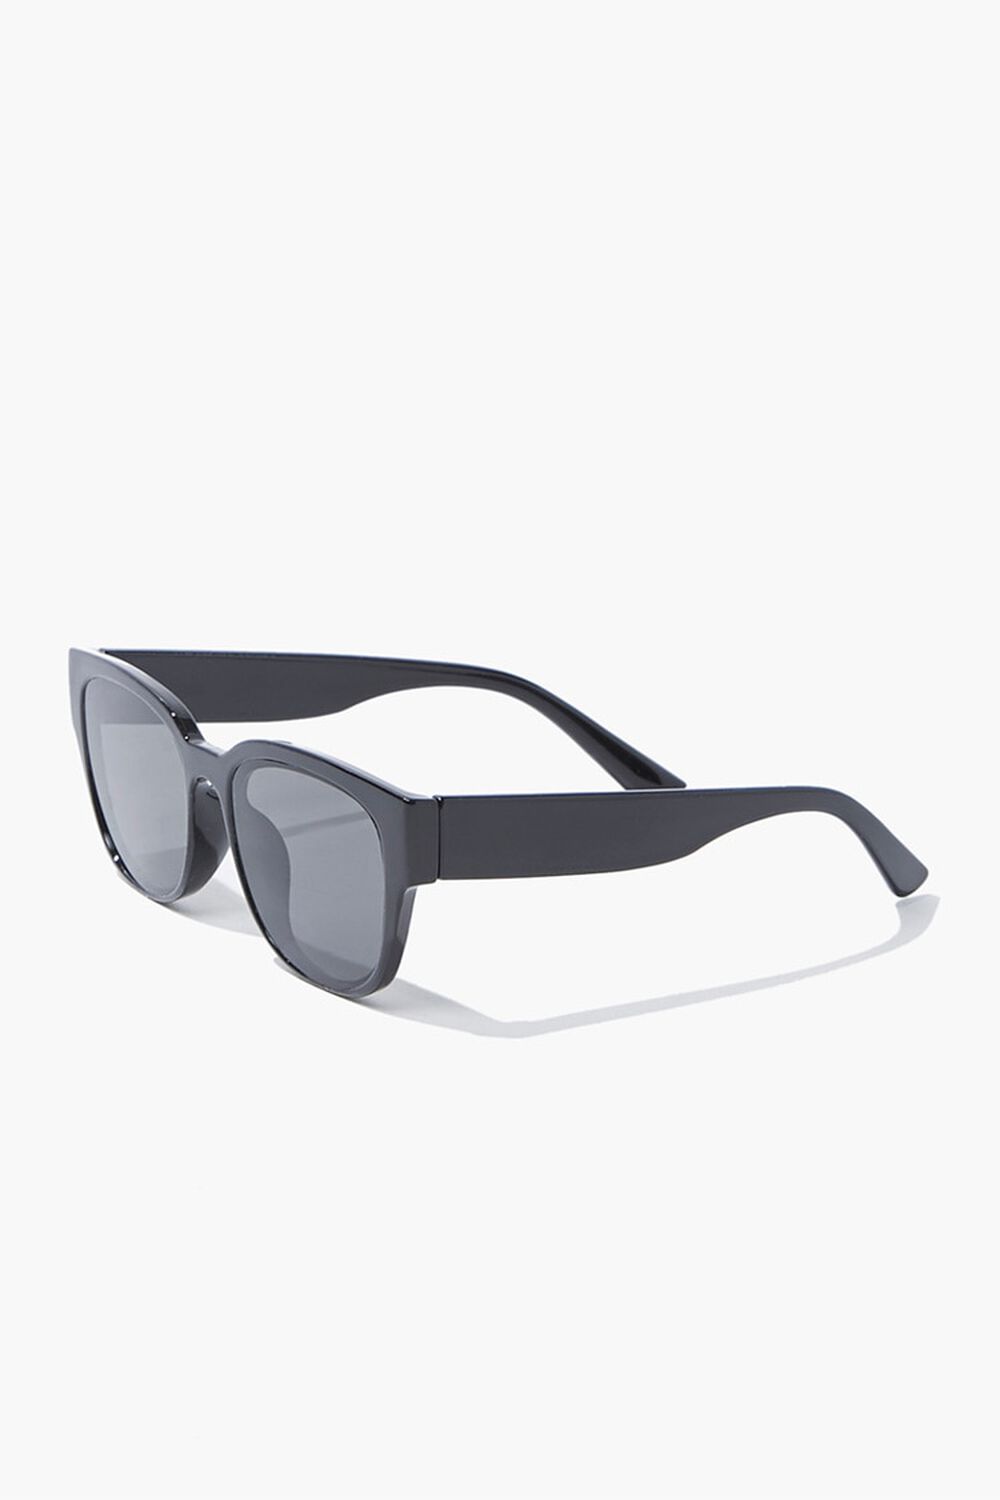 BLACK/BLACK Square Tinted Sunglasses, image 3